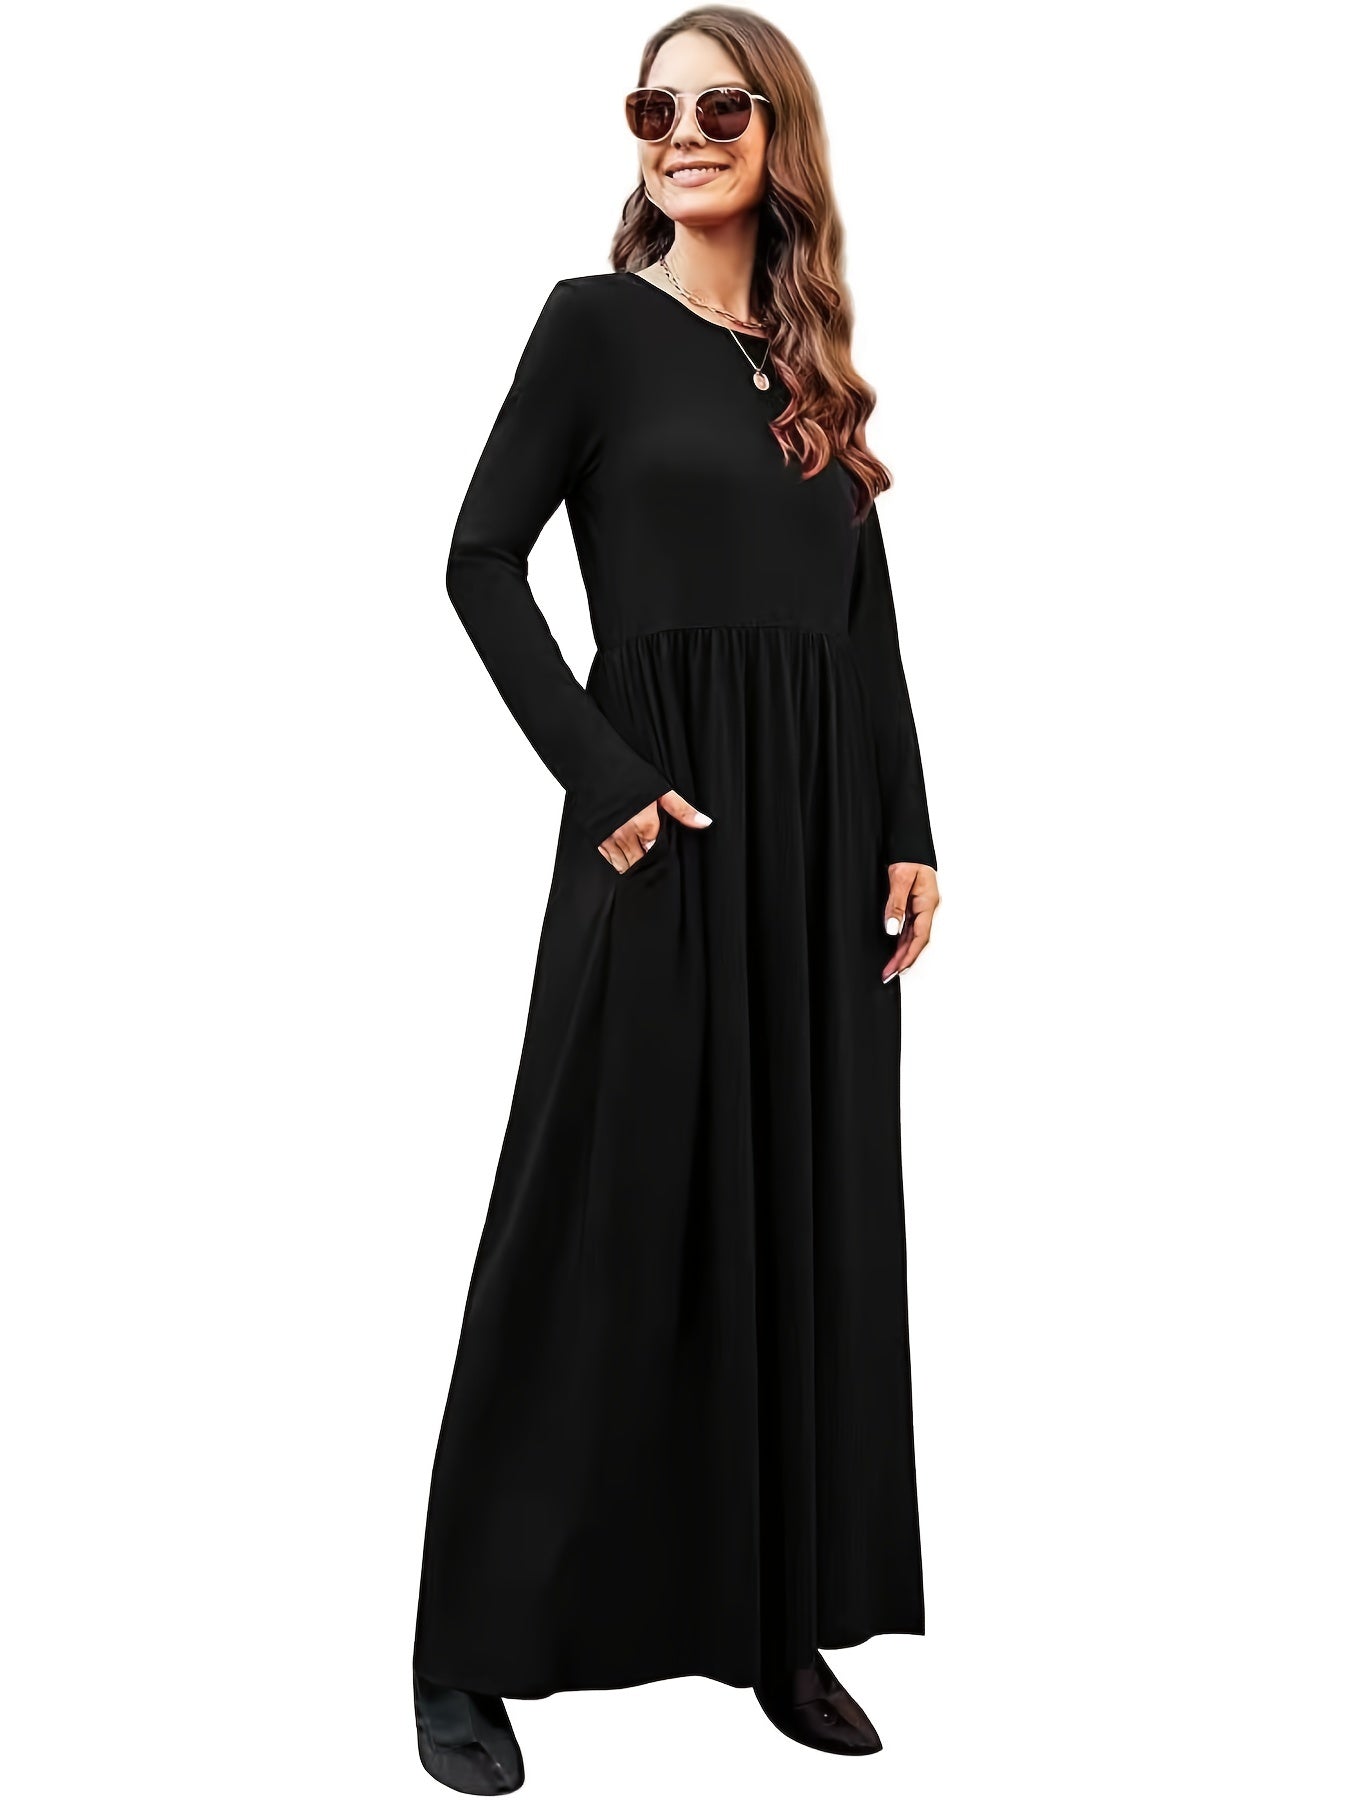 Solid Pocket Round Neck Long Sleeve Dress with Elegant Ruffled Hem High Waist Maxi Dress